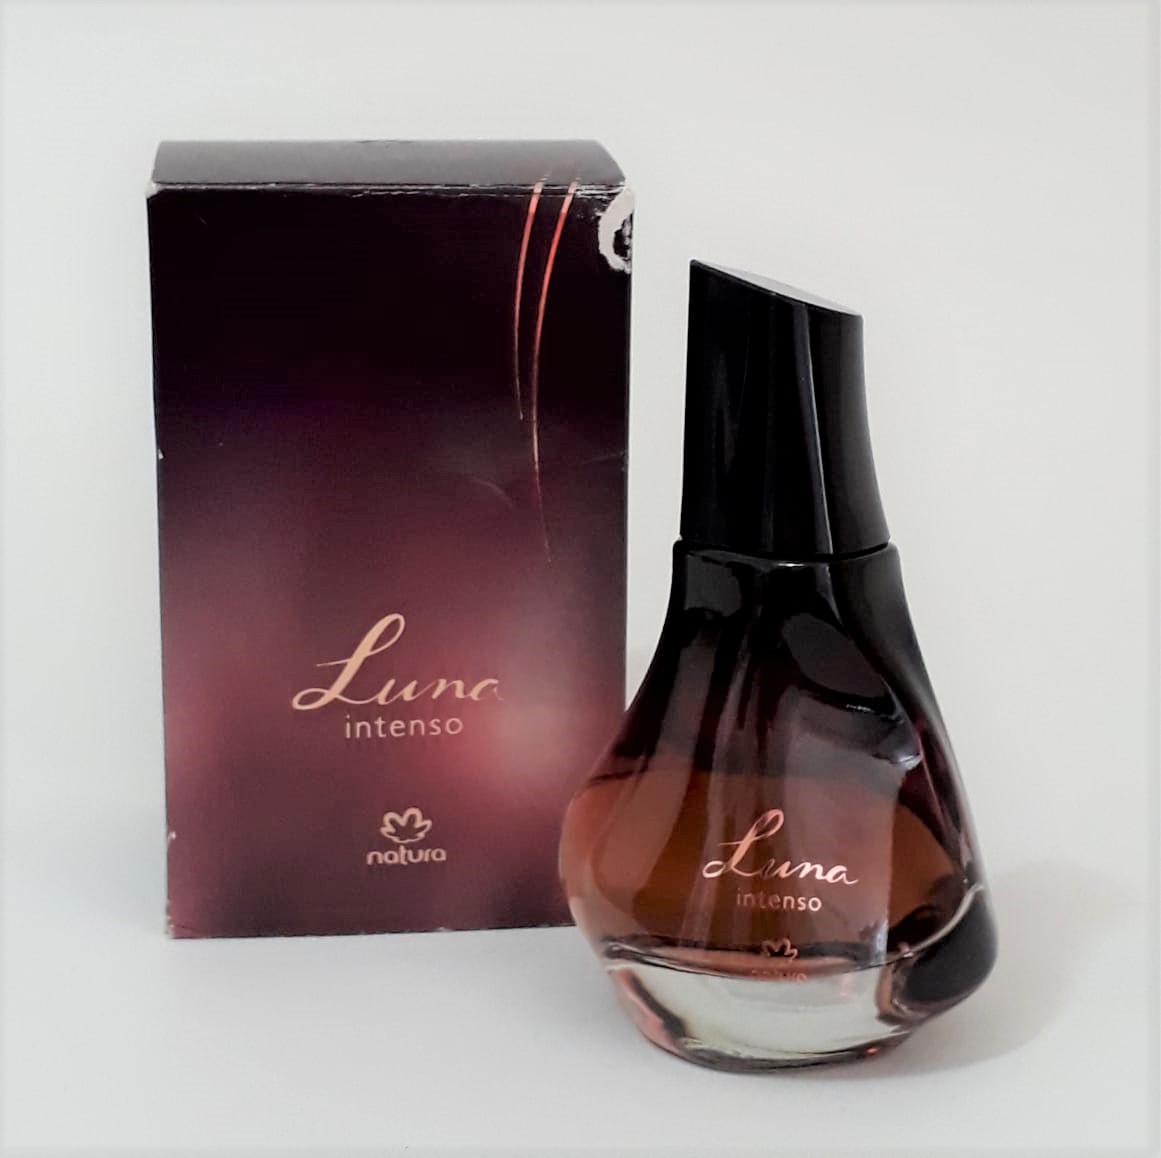 NATURA - Perfume LUNA intenso - 11x6x7 cm - na embalage